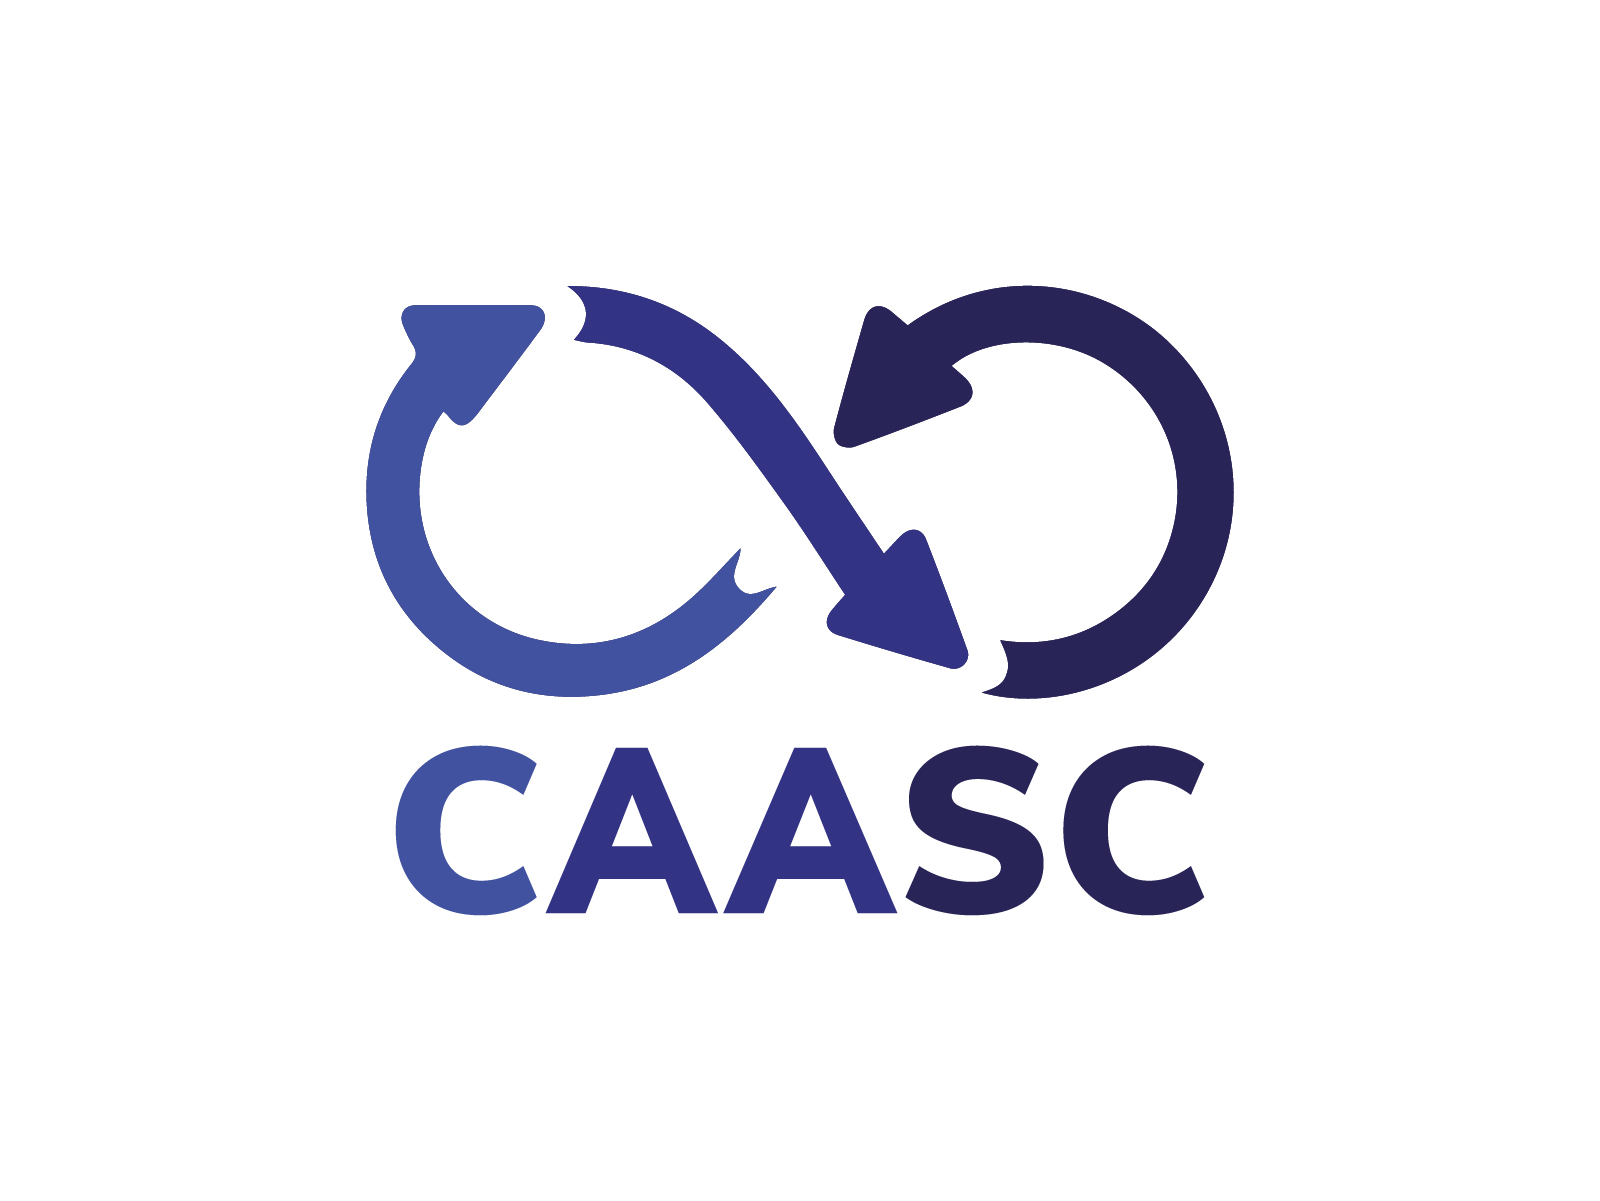 project-caasc logo